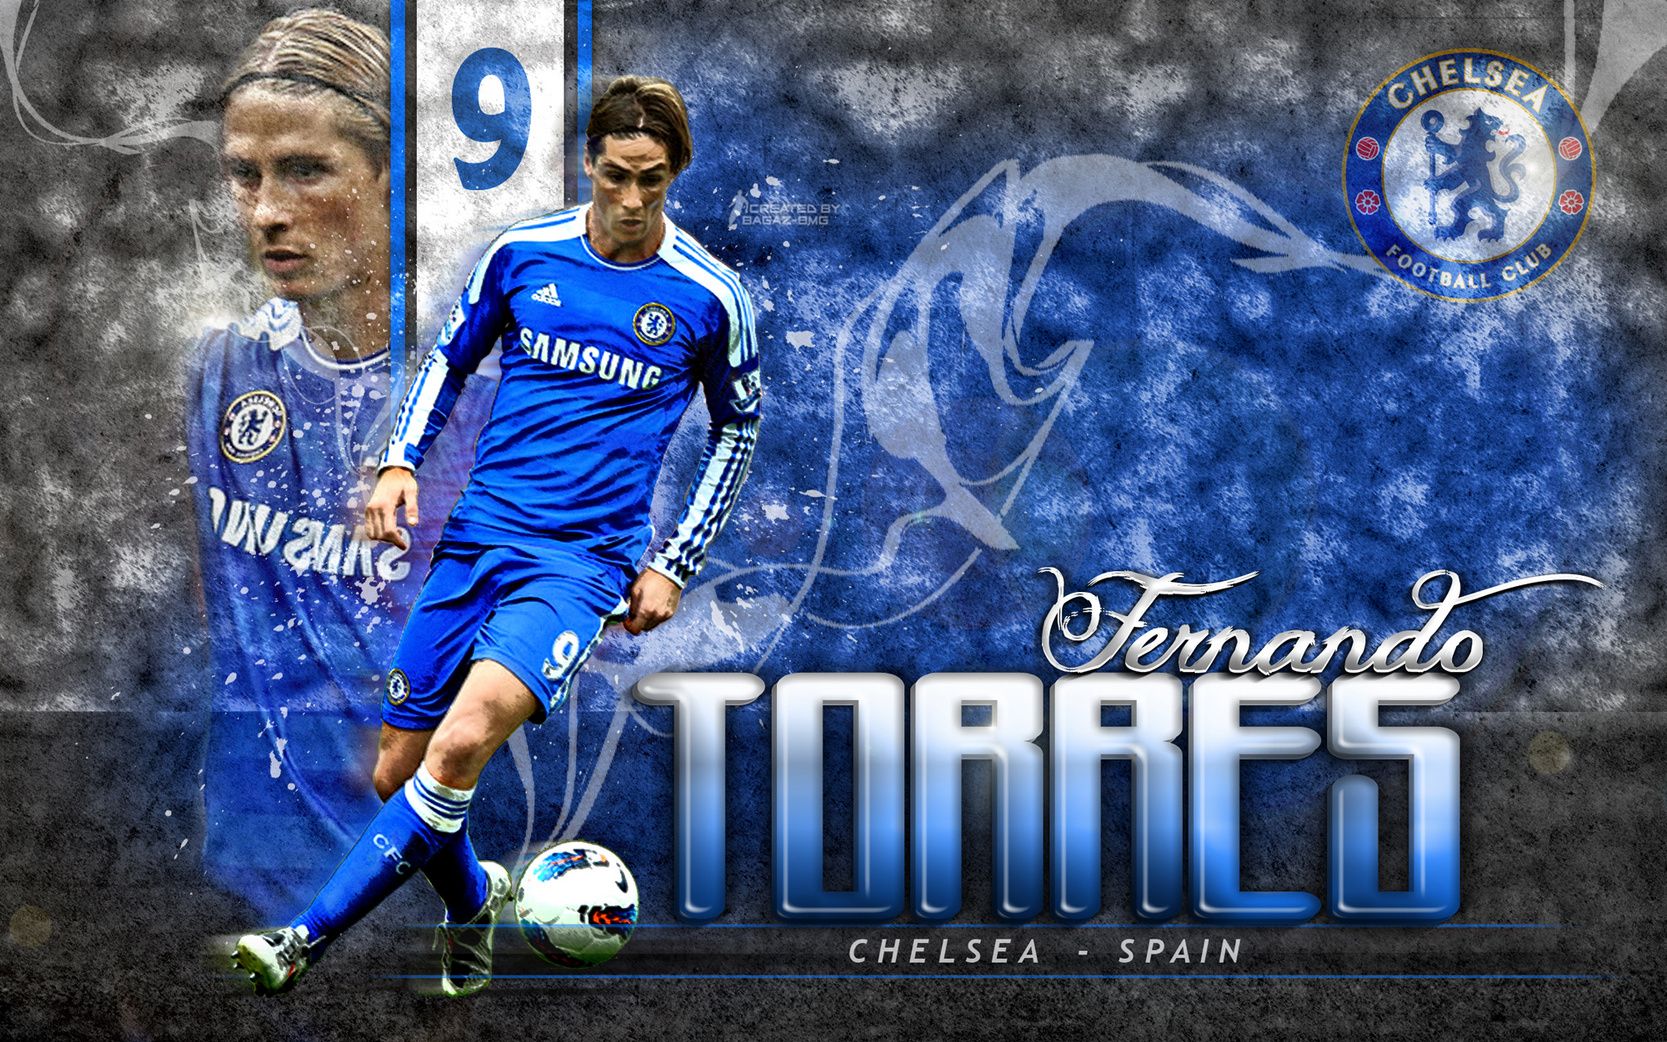 Fernando Torres Striker Wallpaper - Football HD Wallpapers